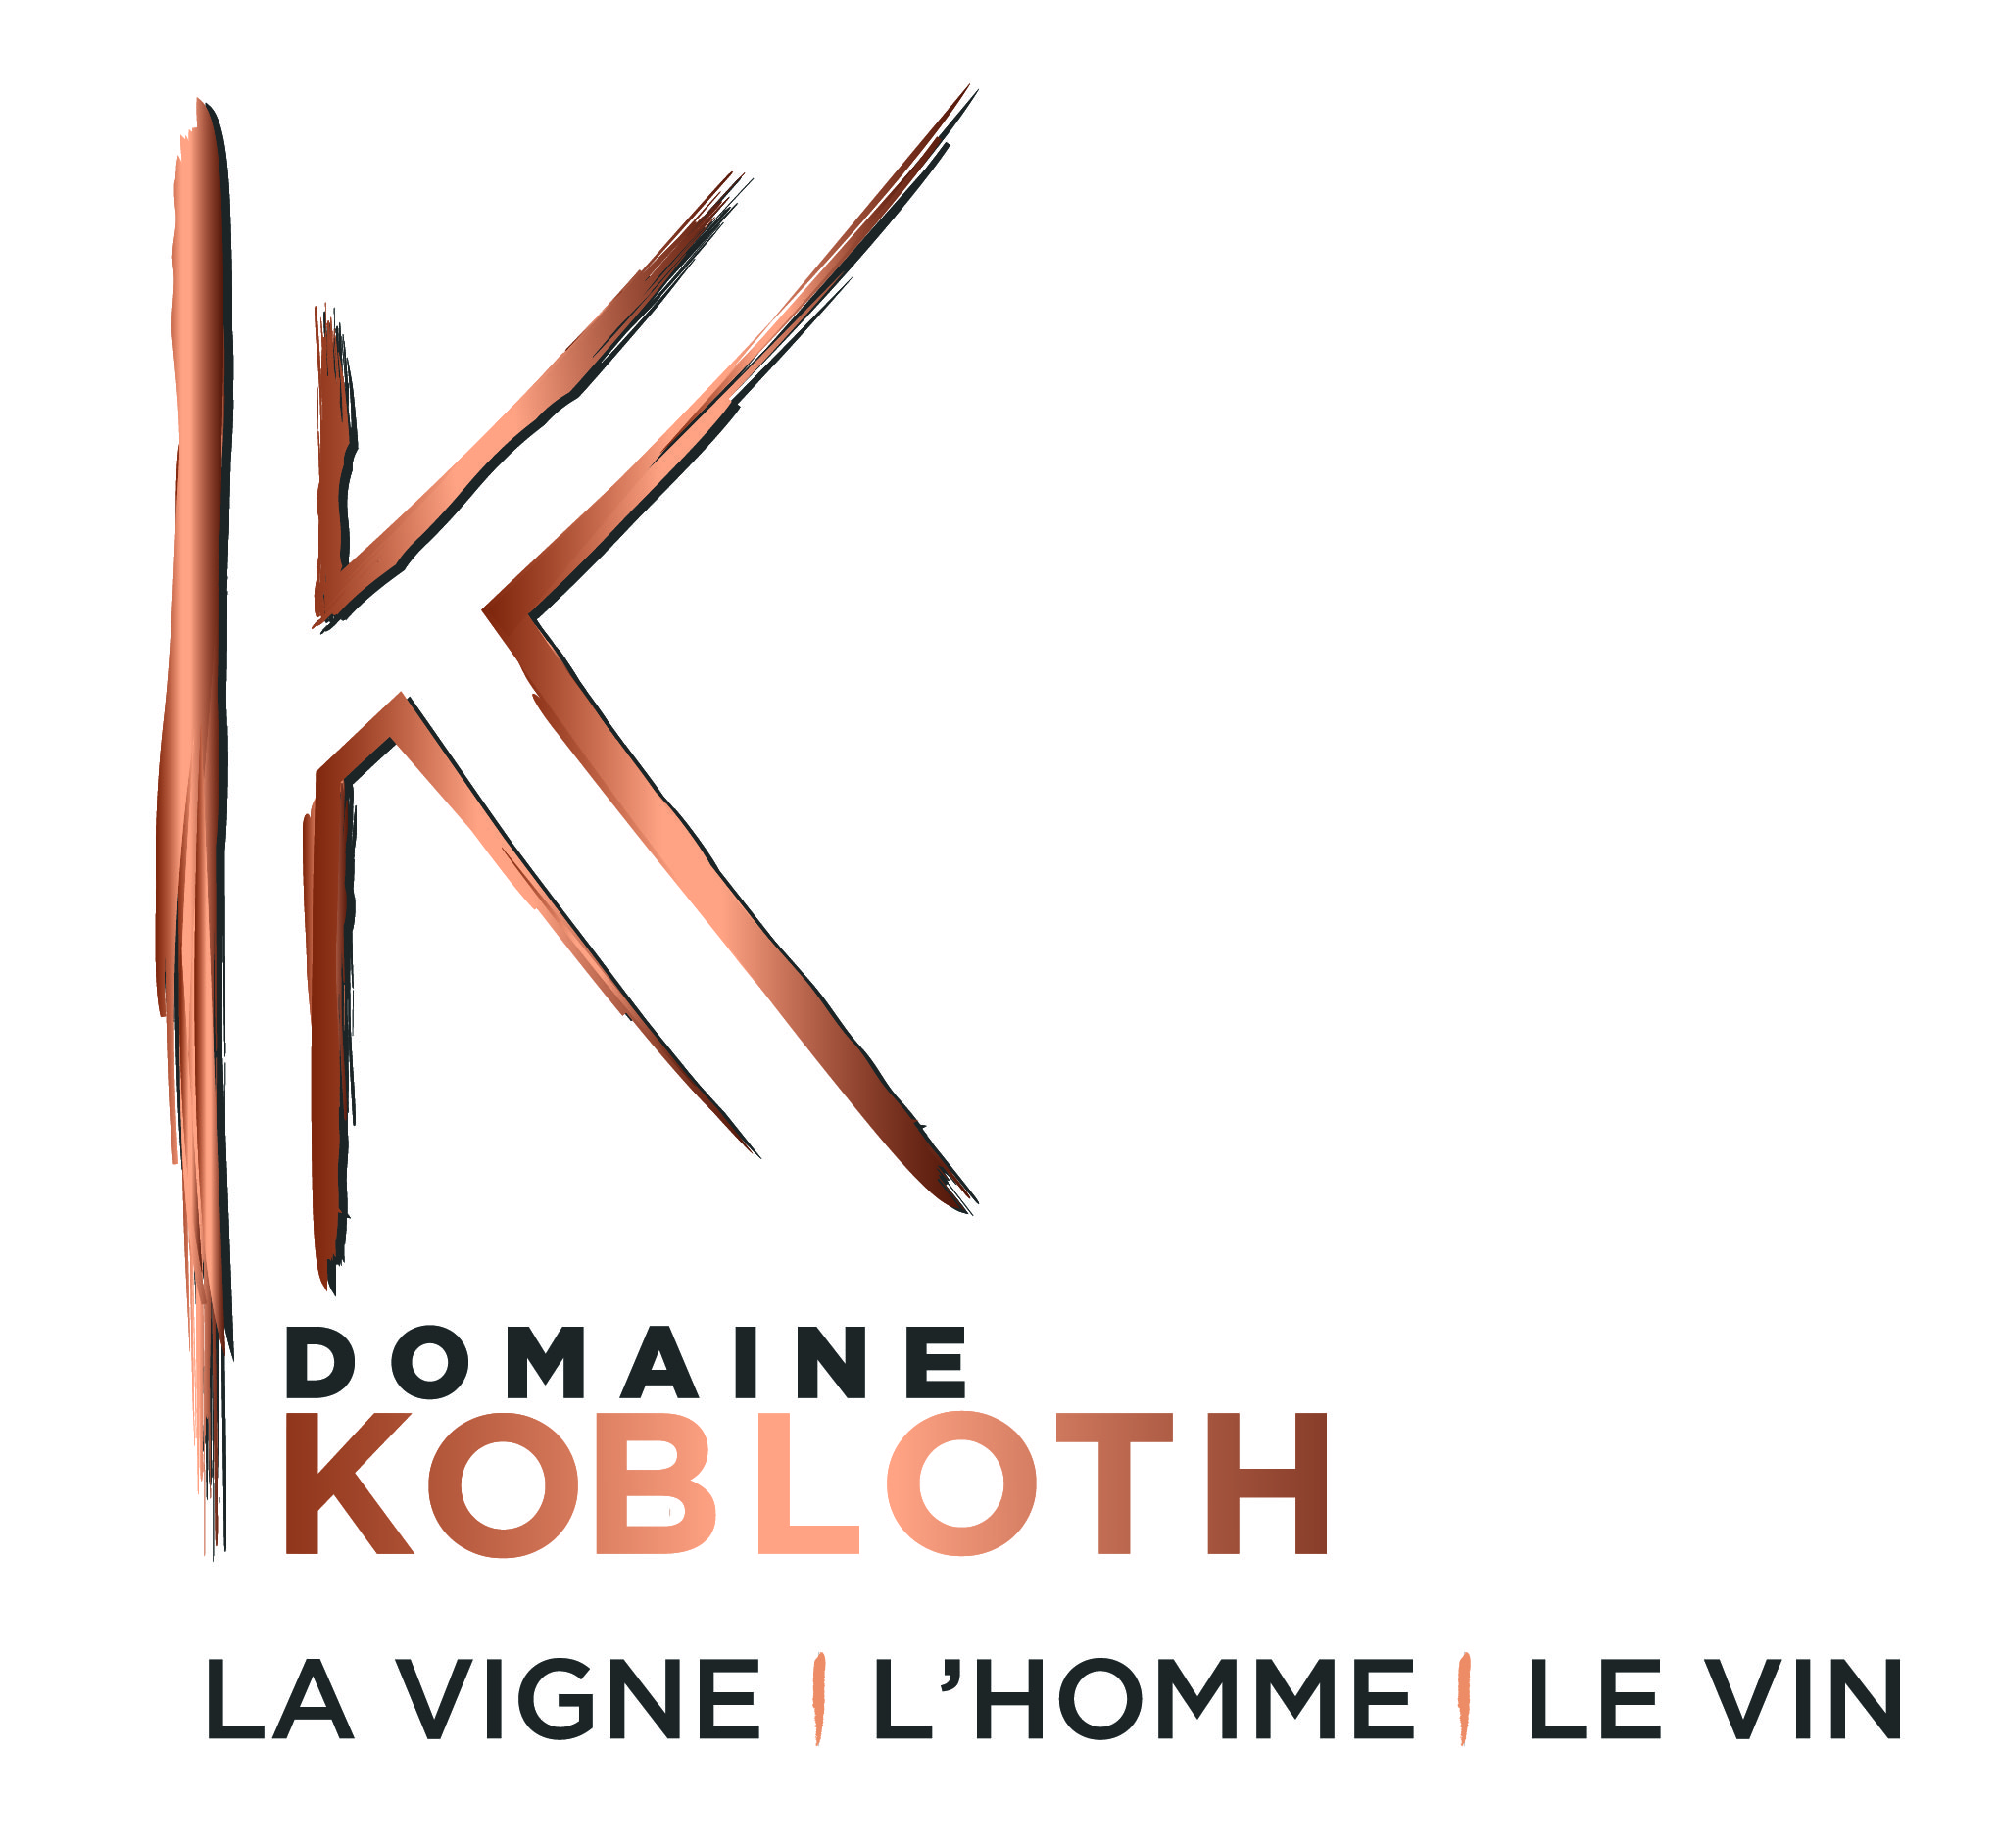 Domaine Kobloth